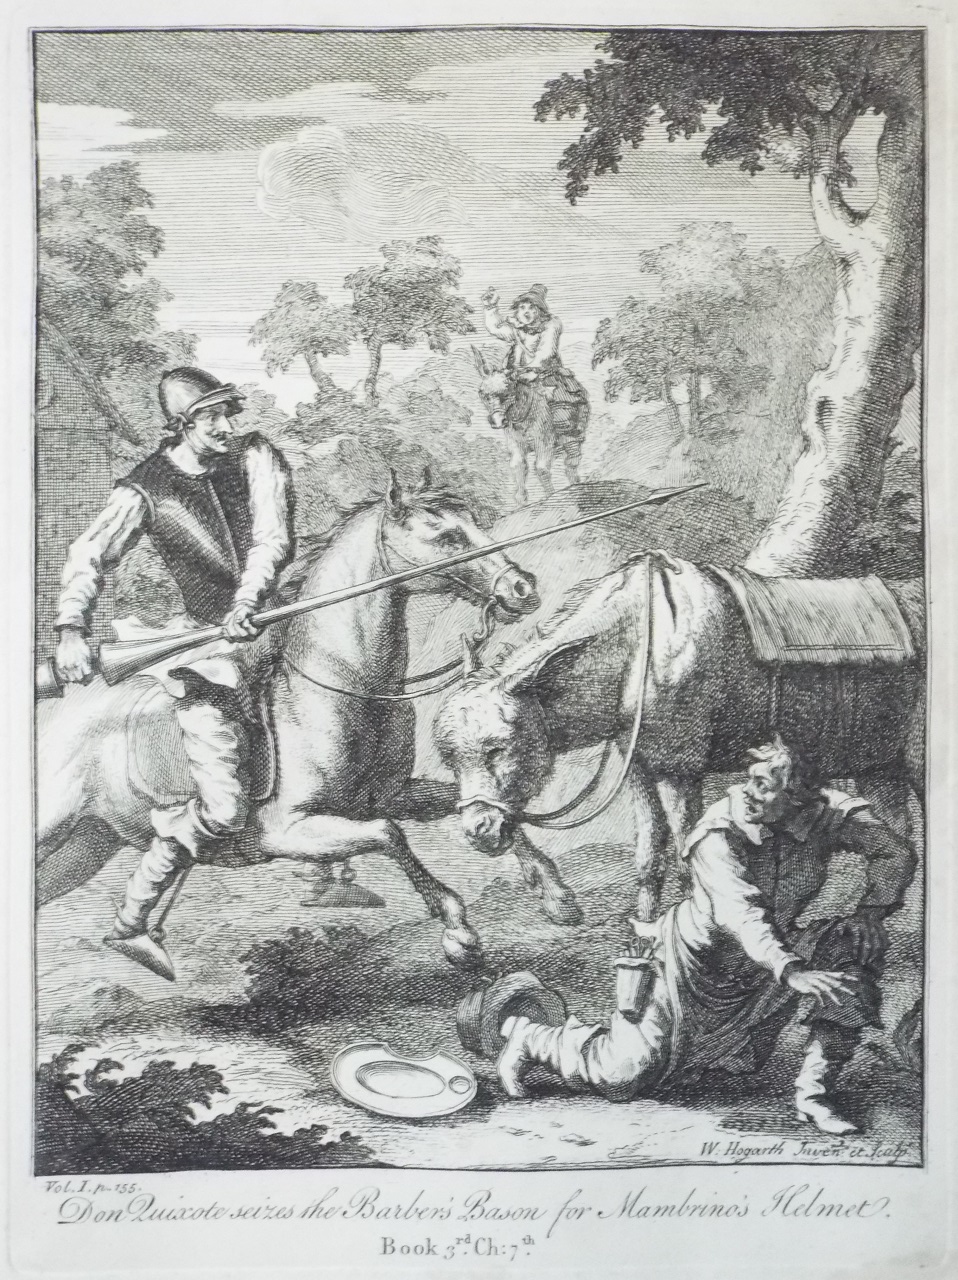 Print - Don Quixote seizes the Barber's Bason for Mambrino's Helmet. Book 3rd. Ch: 7th. - Hogarth